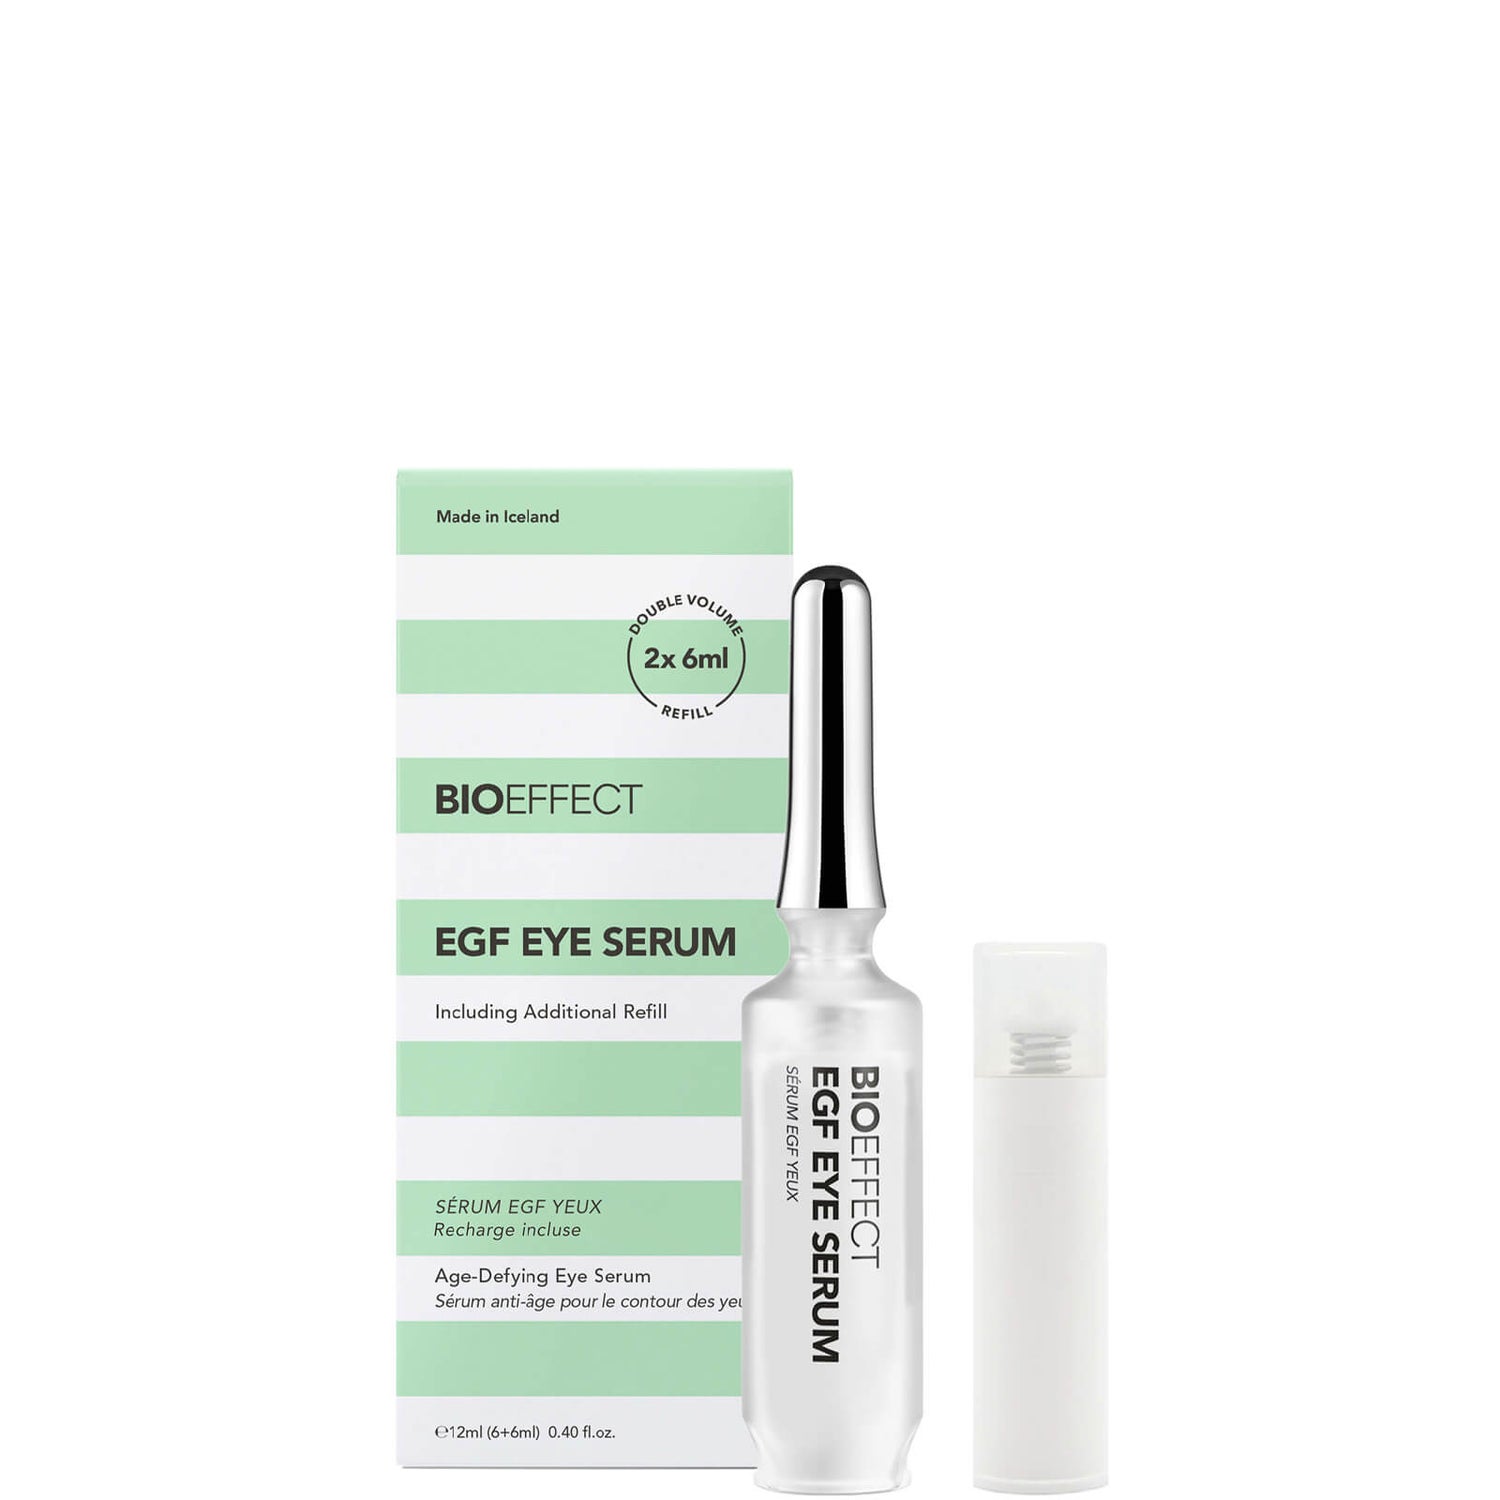 BIOEFFECT Eye Serum and Refill Set